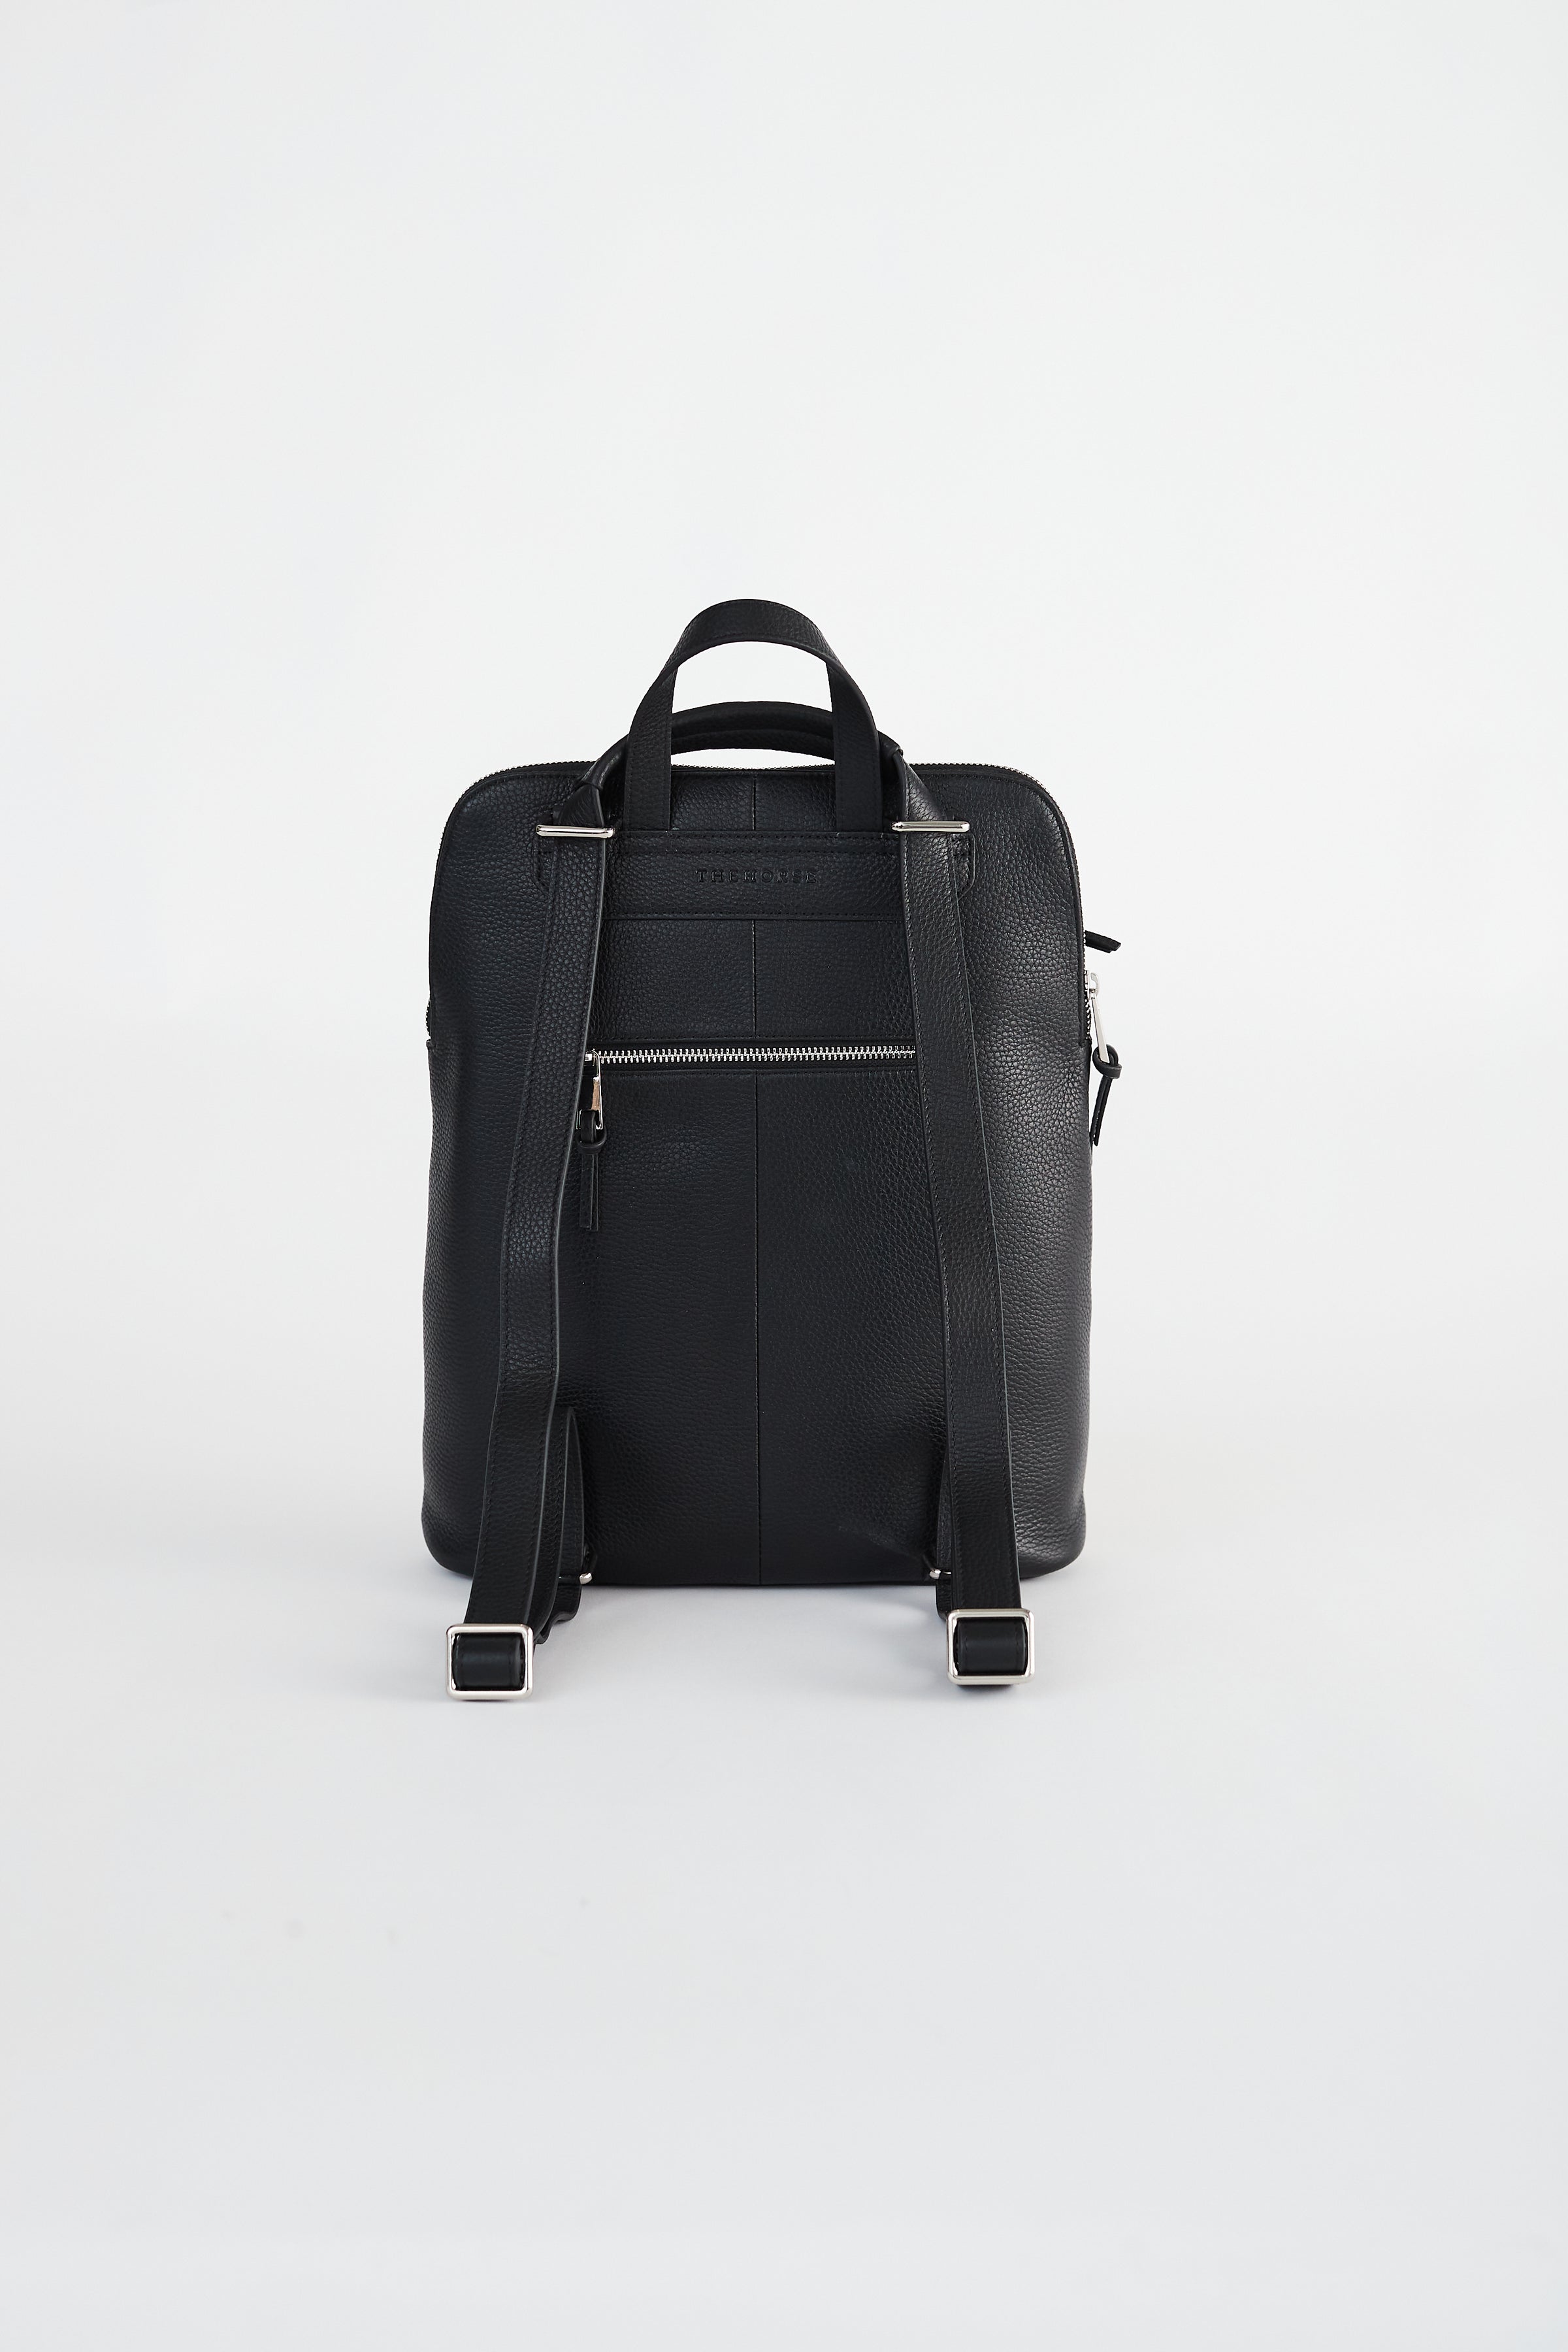 Backpack: Black Pebbled Leather